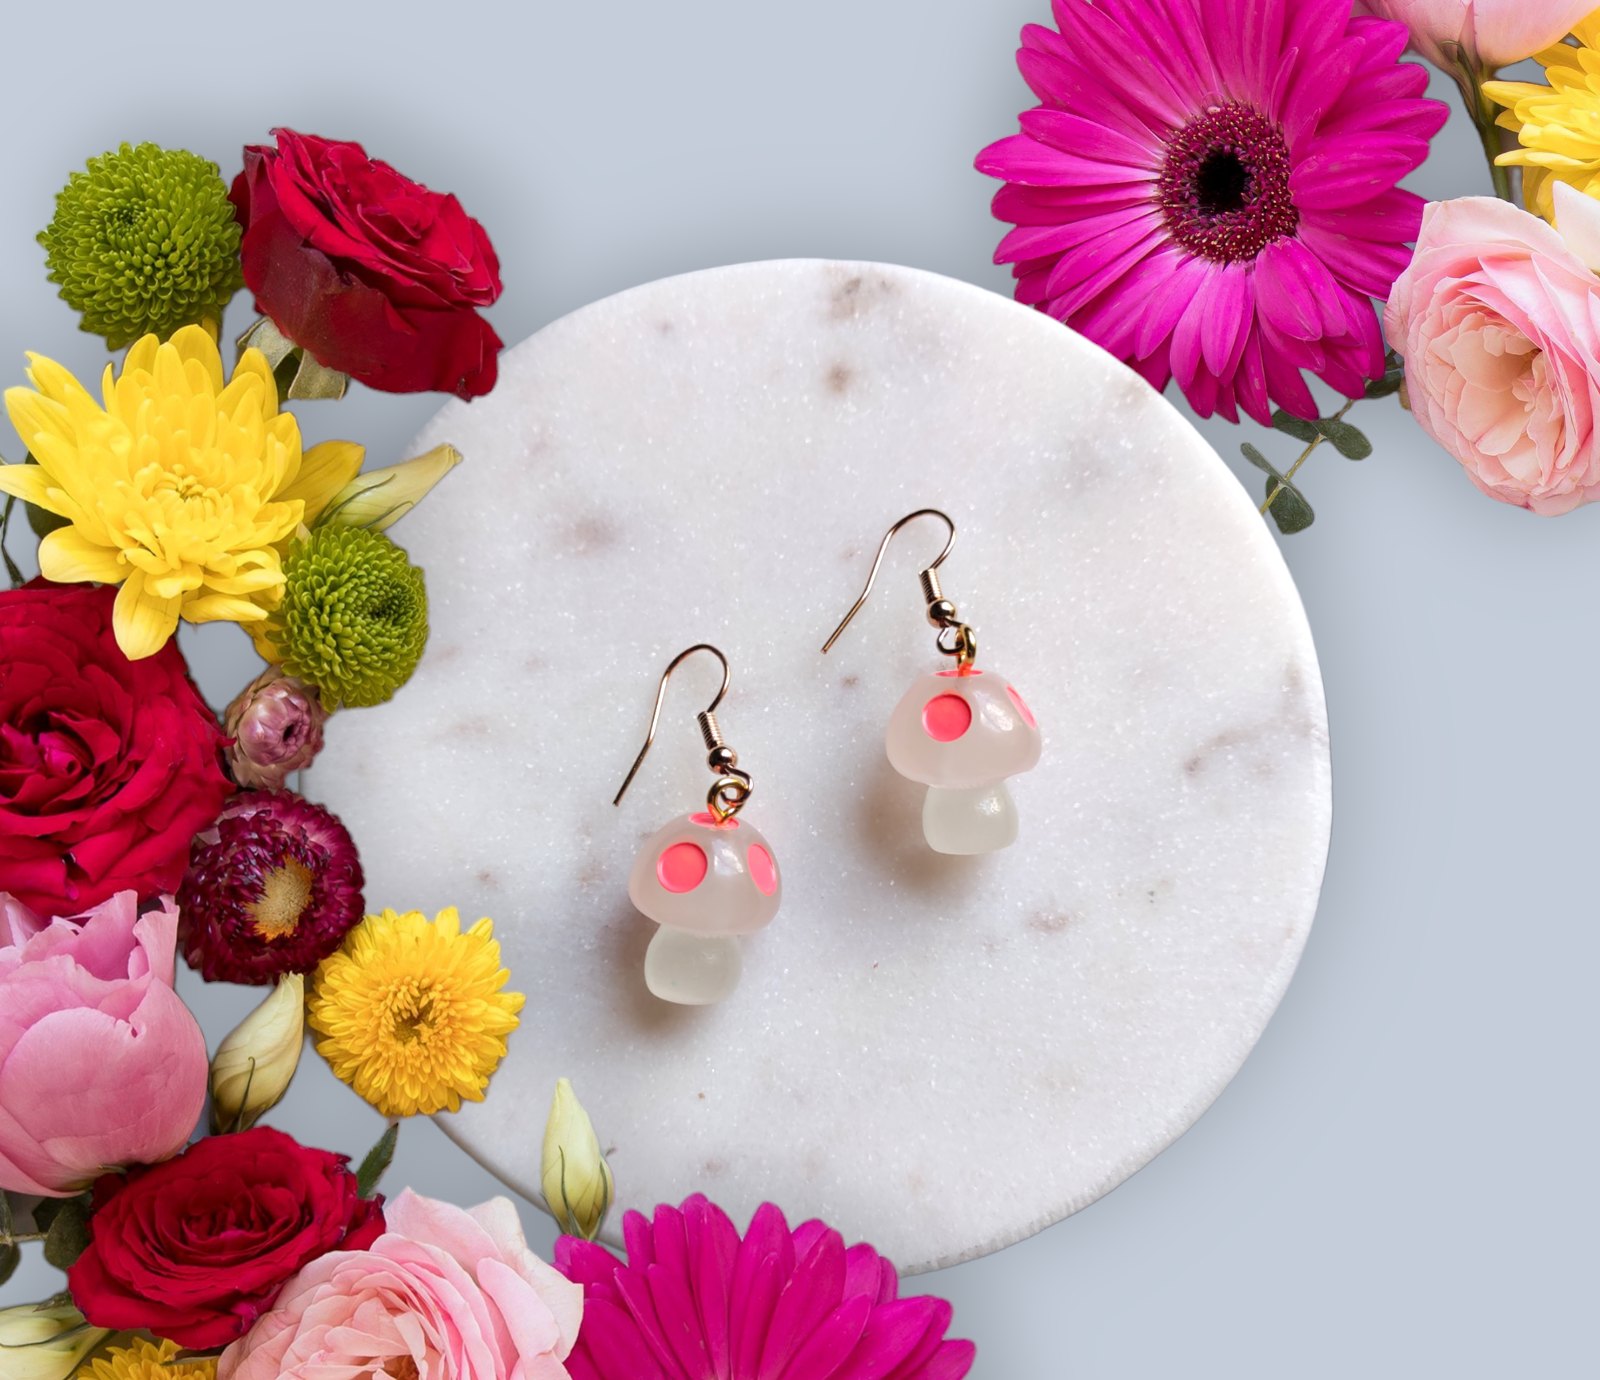 Mushroom Resin Charms earrings from Karma Goodness Designs